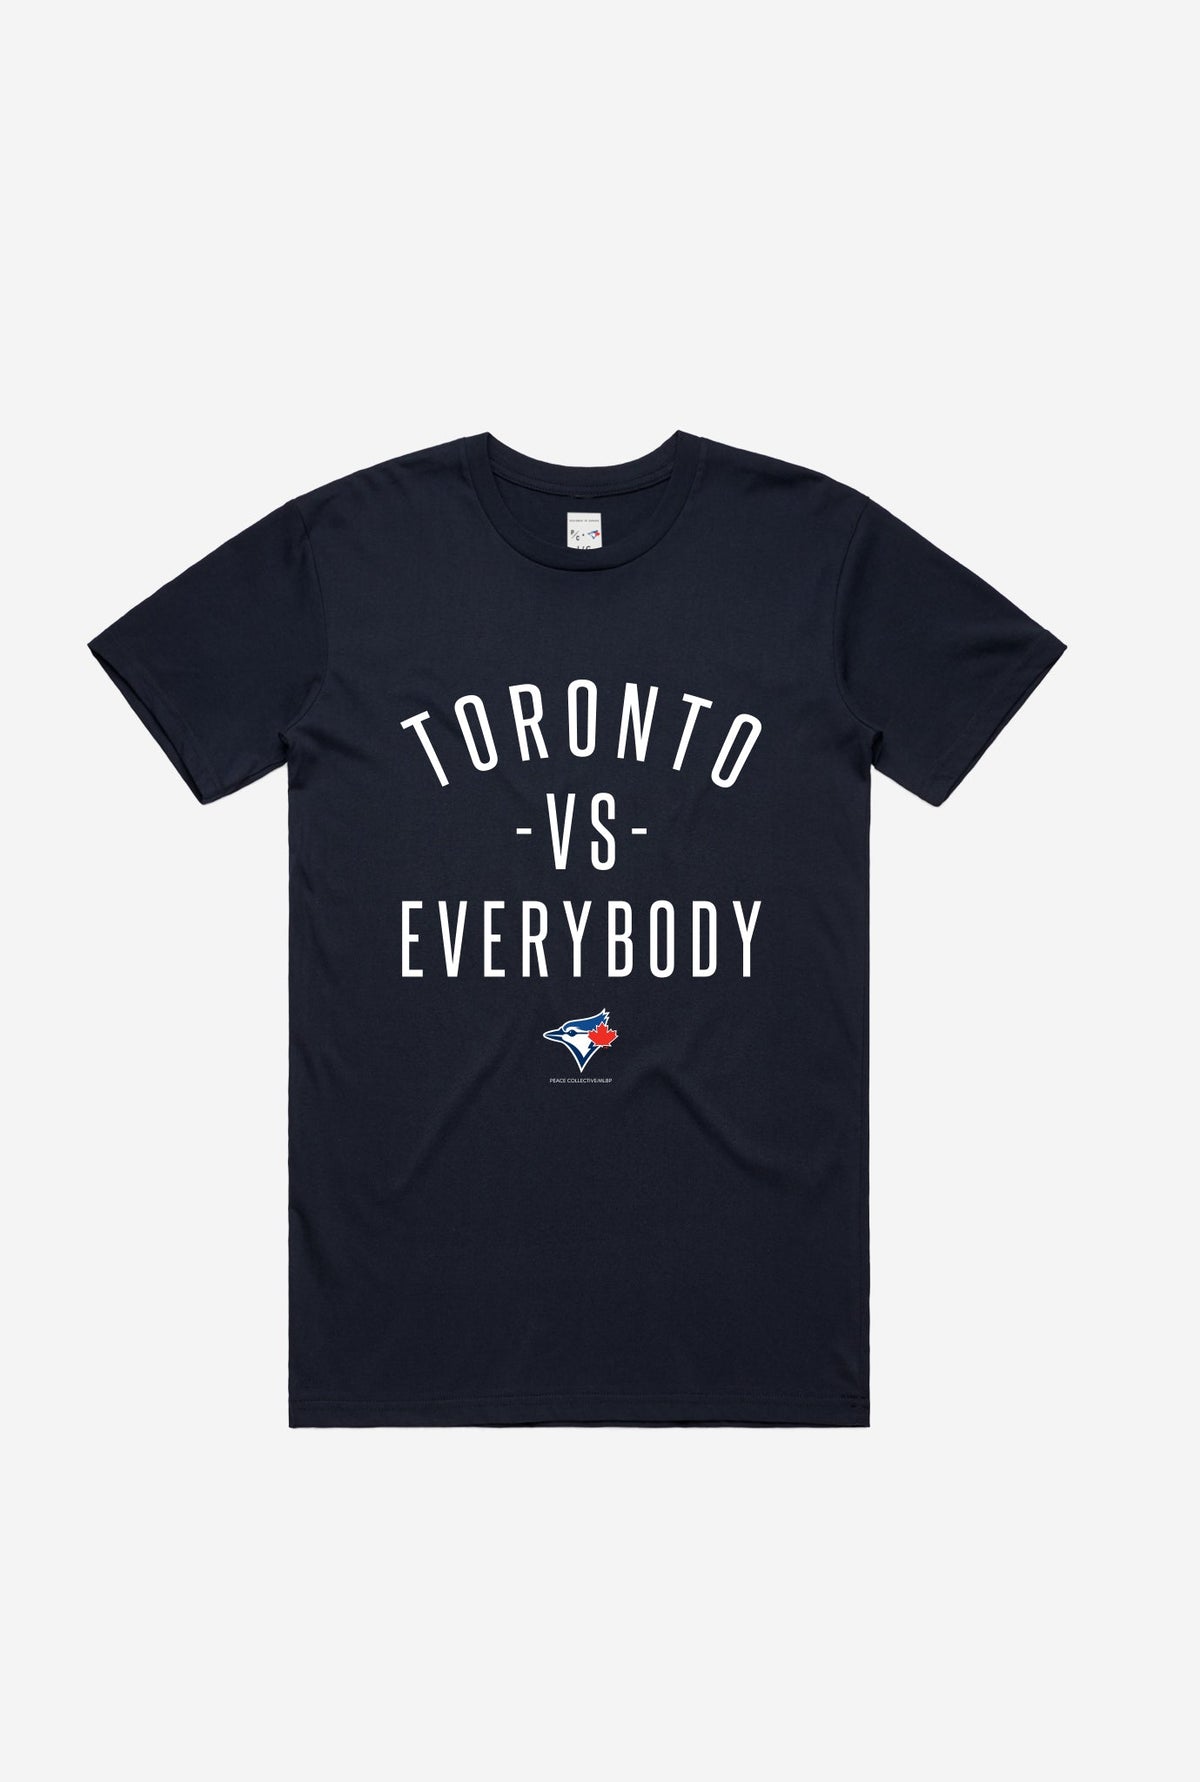 Blue Jays™ Collection Toronto -vs- Everybody® T-Shirt - Navy